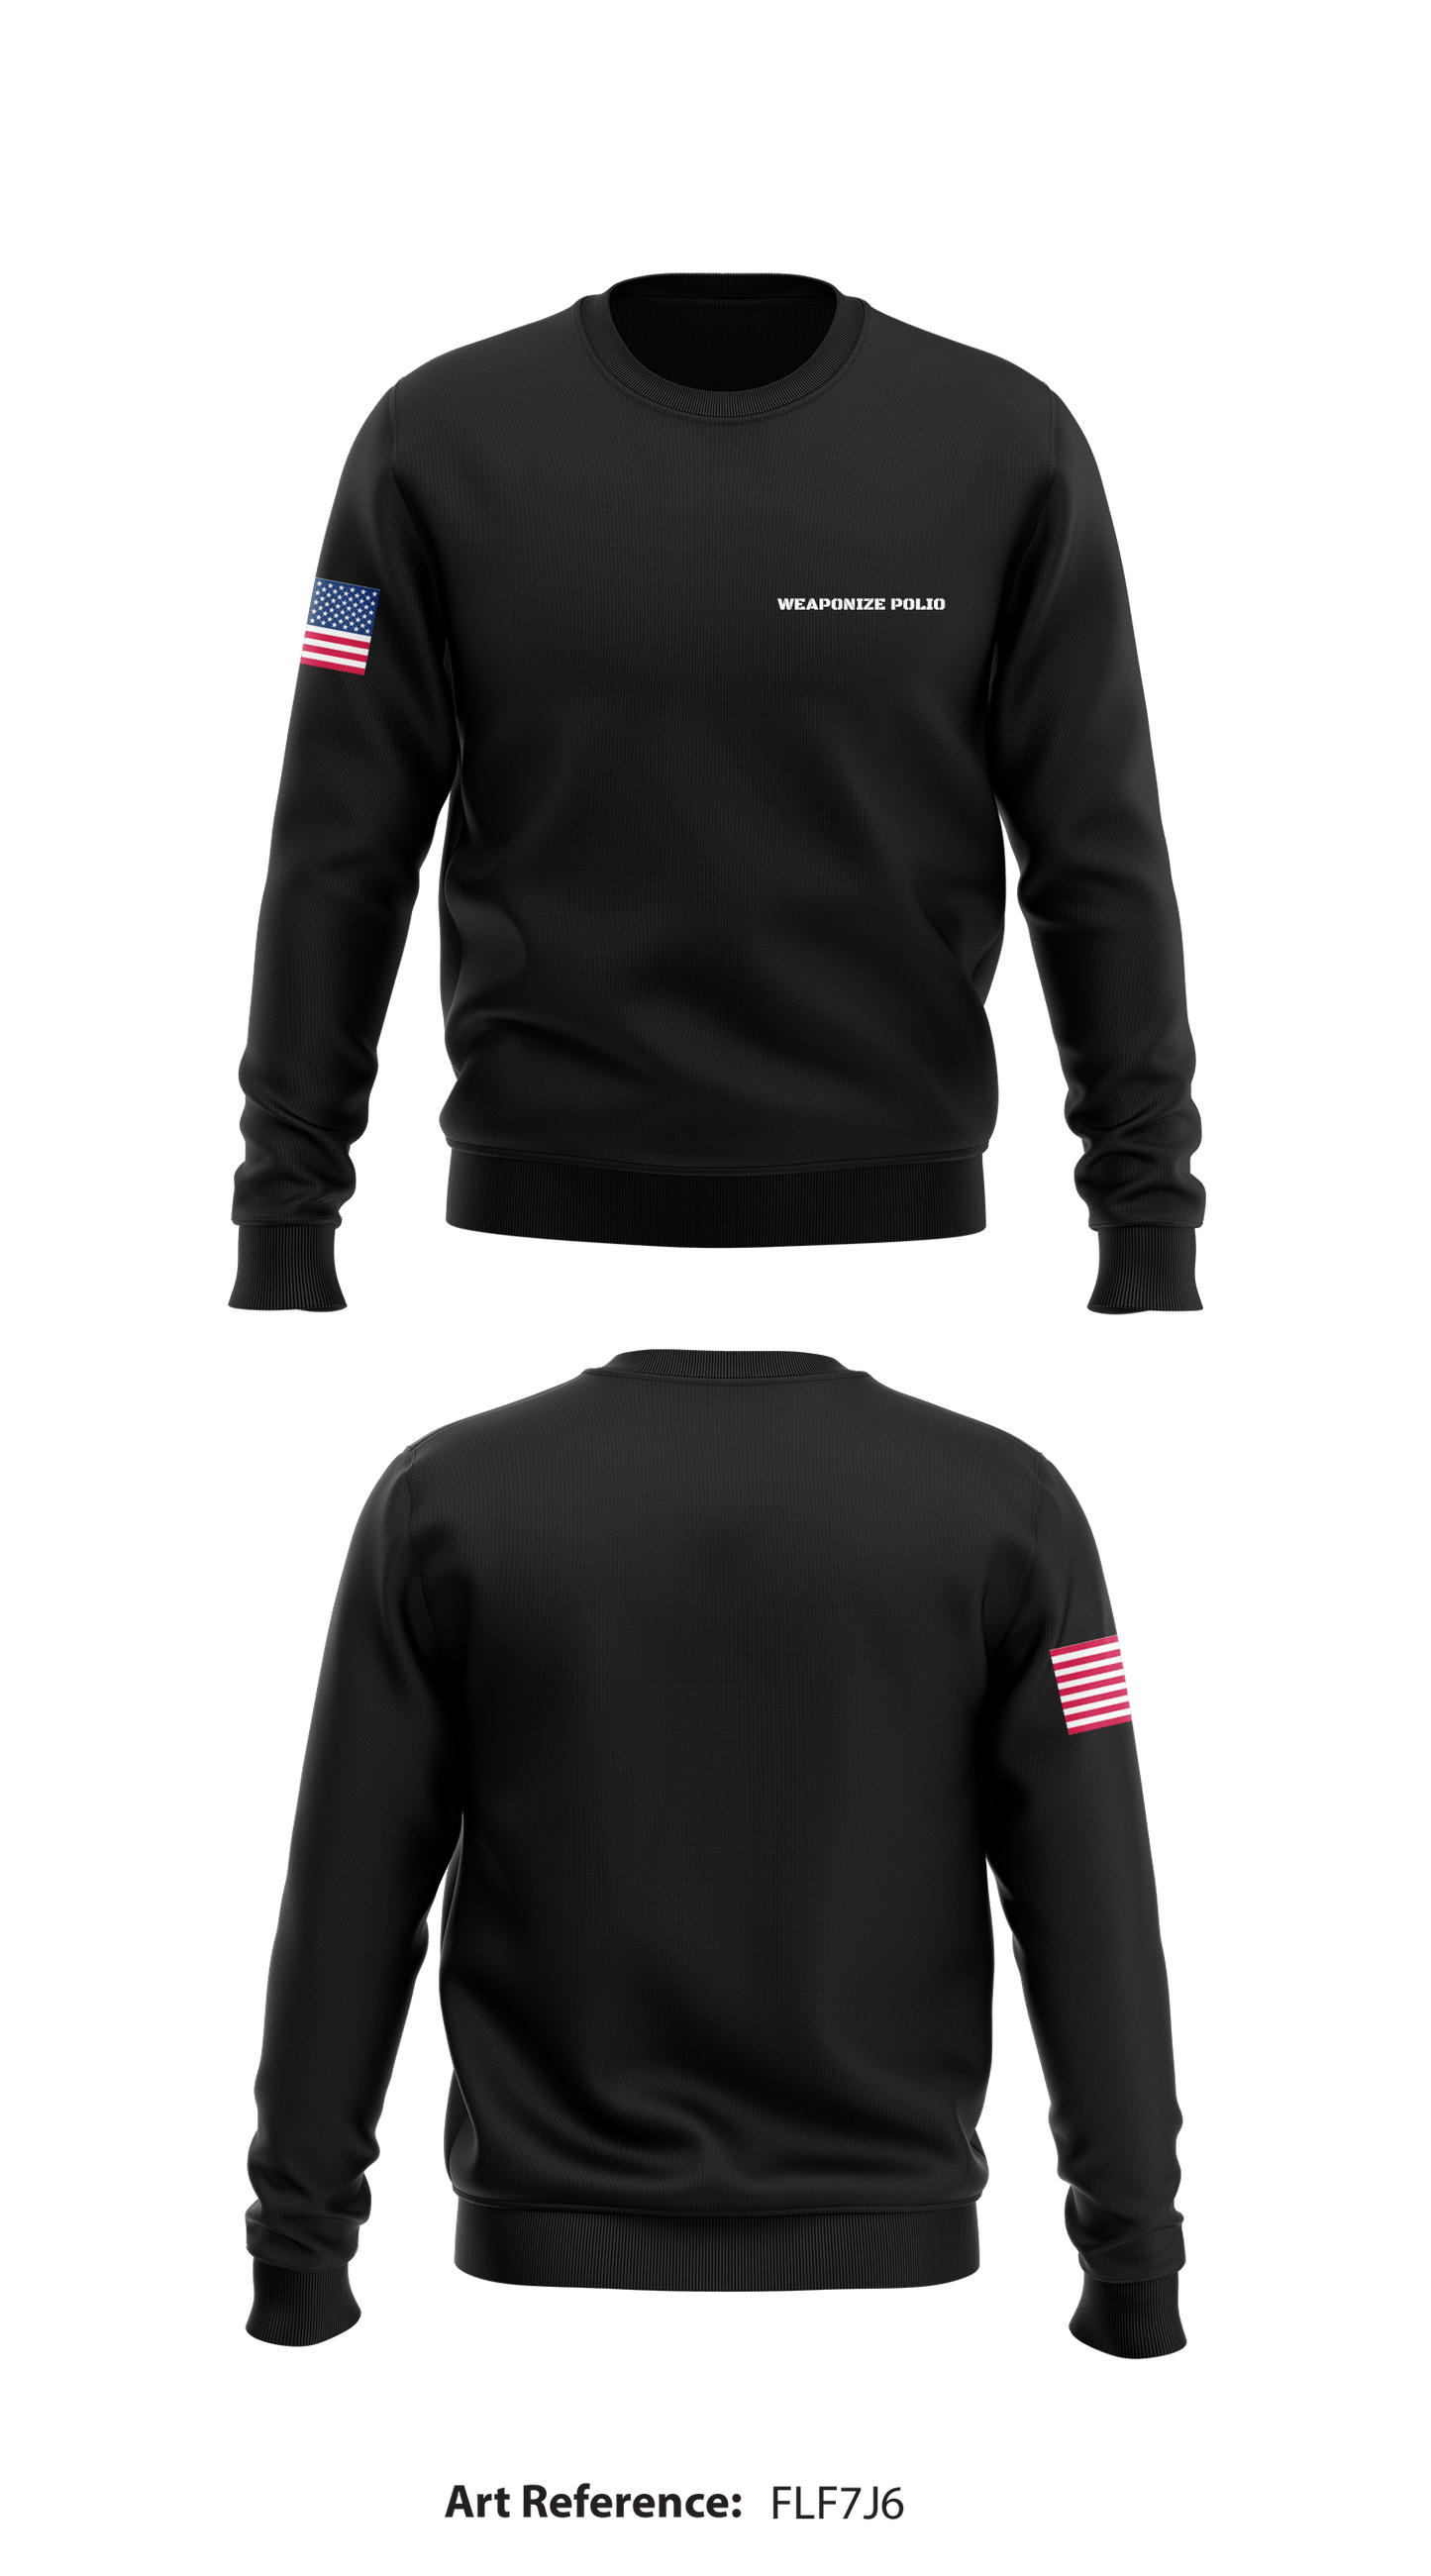 Weaponize Polio Store 1 Core Men's Crewneck Performance Sweatshirt - FLF7j6